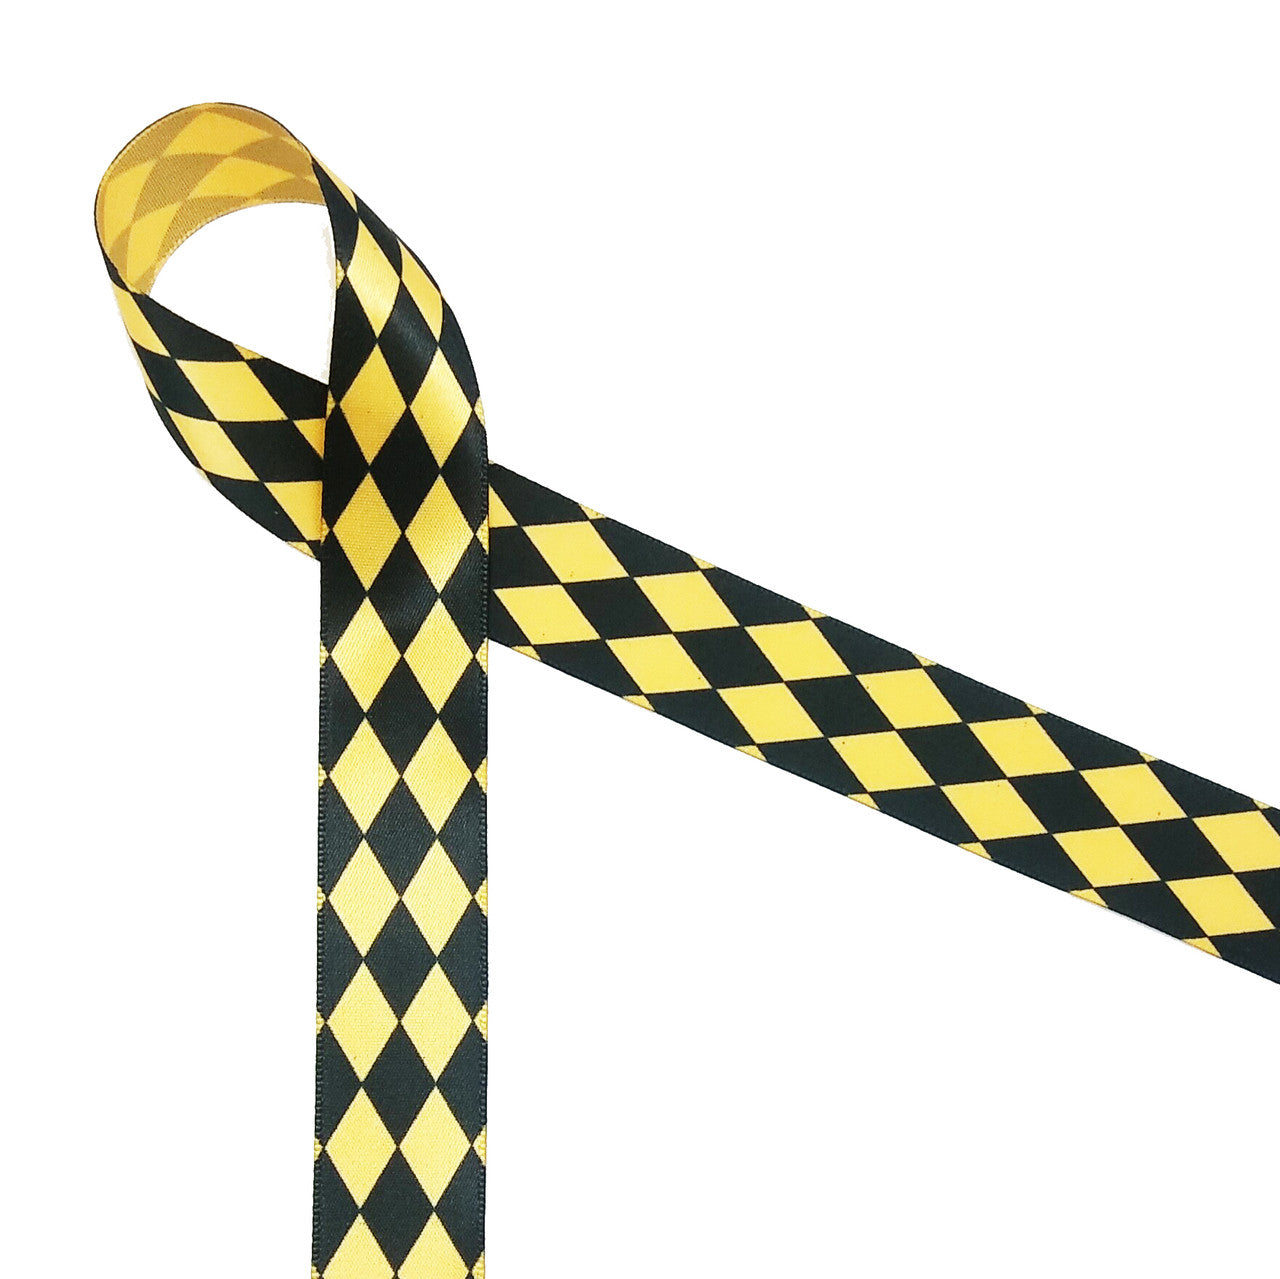 Harlequin print in black on 7/8" yellow single face satin ribbon, 10 yards